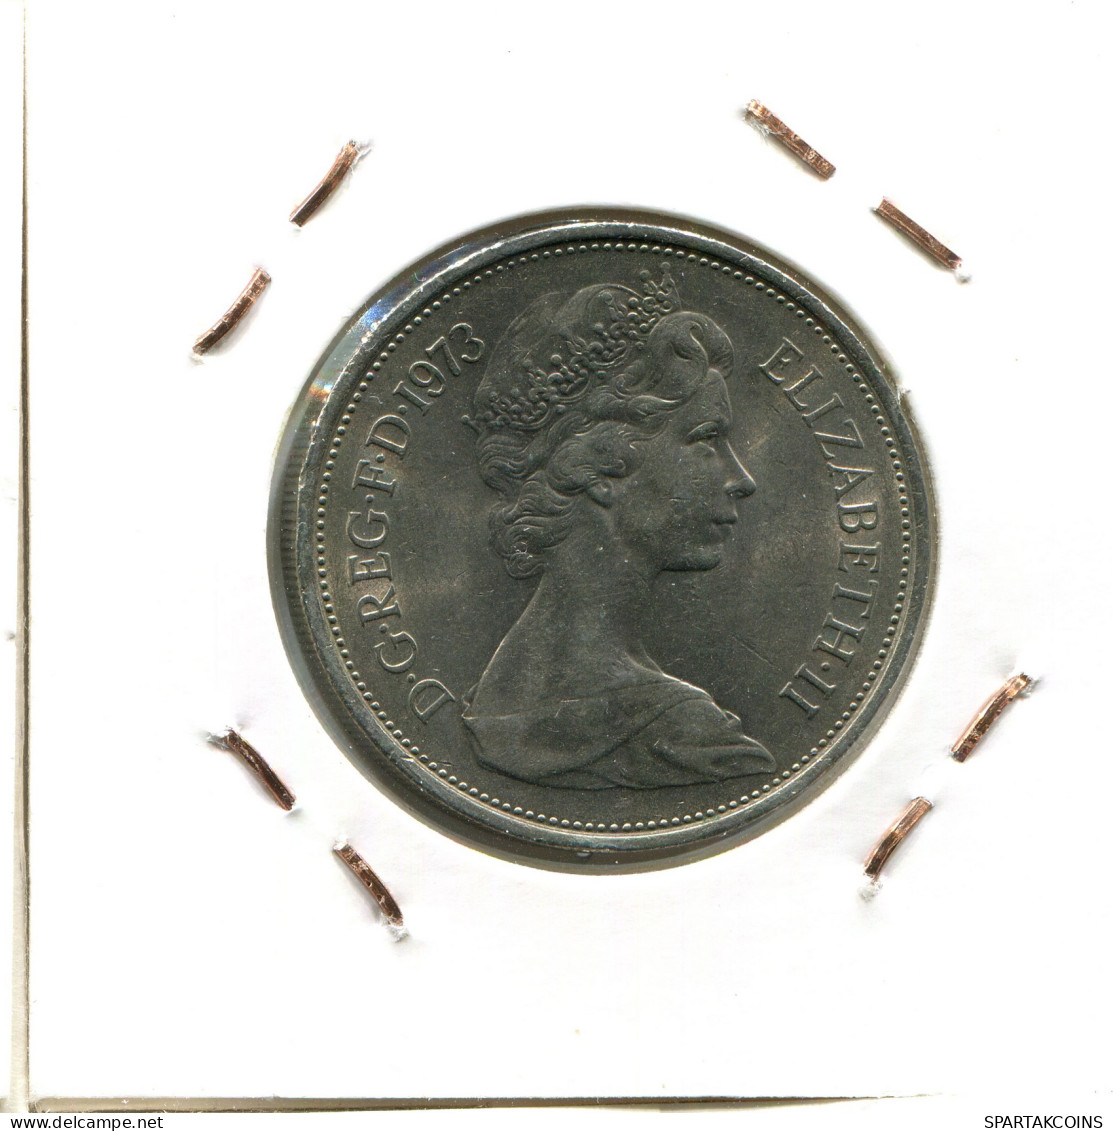 10 PENCE 1973 UK GROßBRITANNIEN GREAT BRITAIN Münze #AW213.D - 10 Pence & 10 New Pence